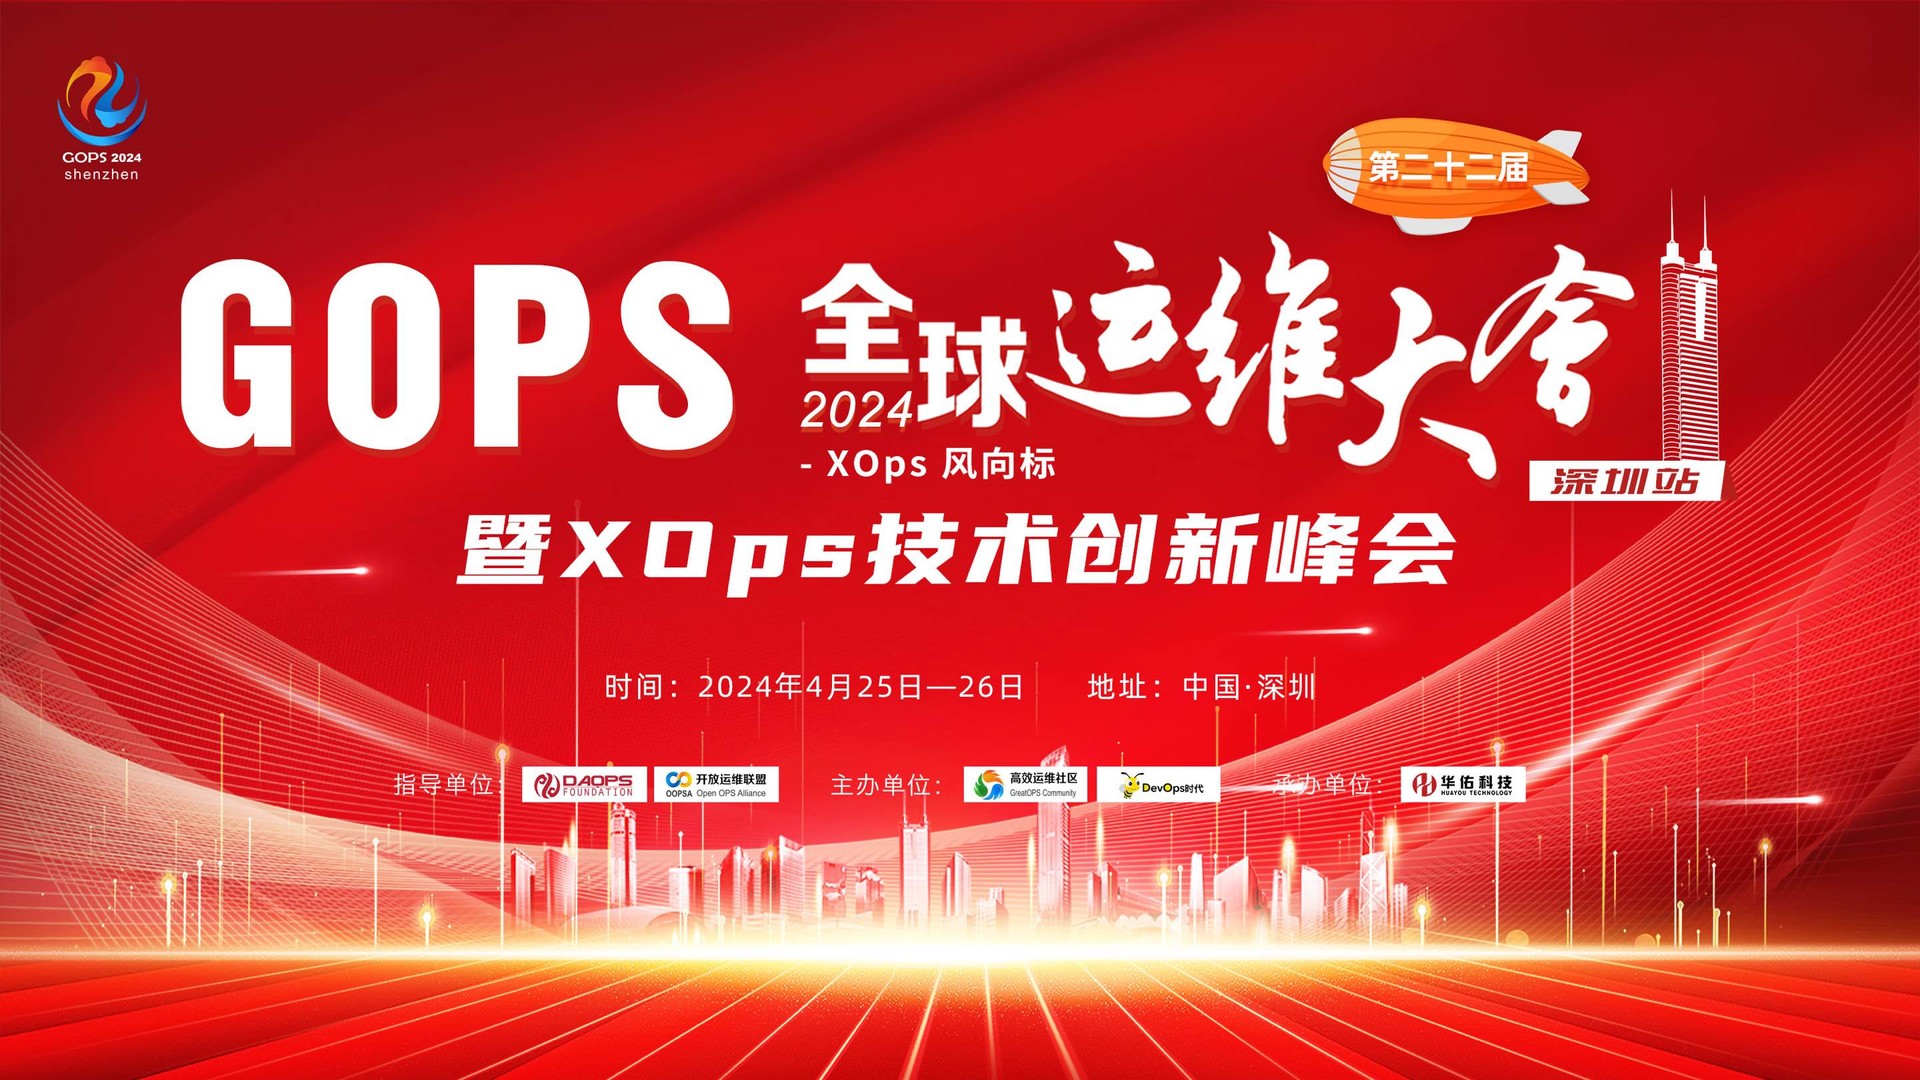 GOPS 全球运维大会暨XOps技术创新峰会2024 · 深圳站